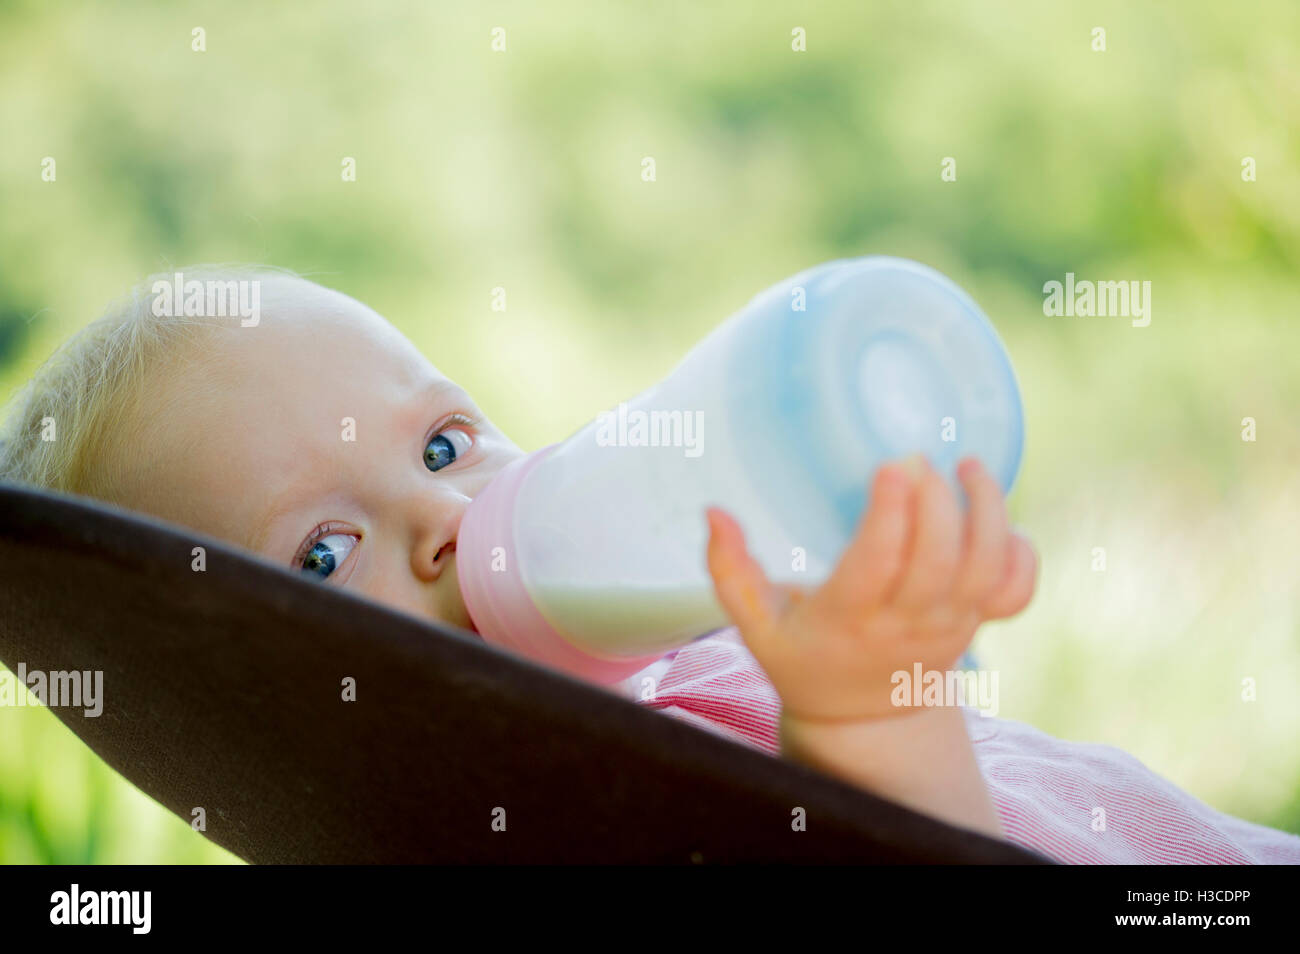 Infant drinking milk from bottle Stock Photo